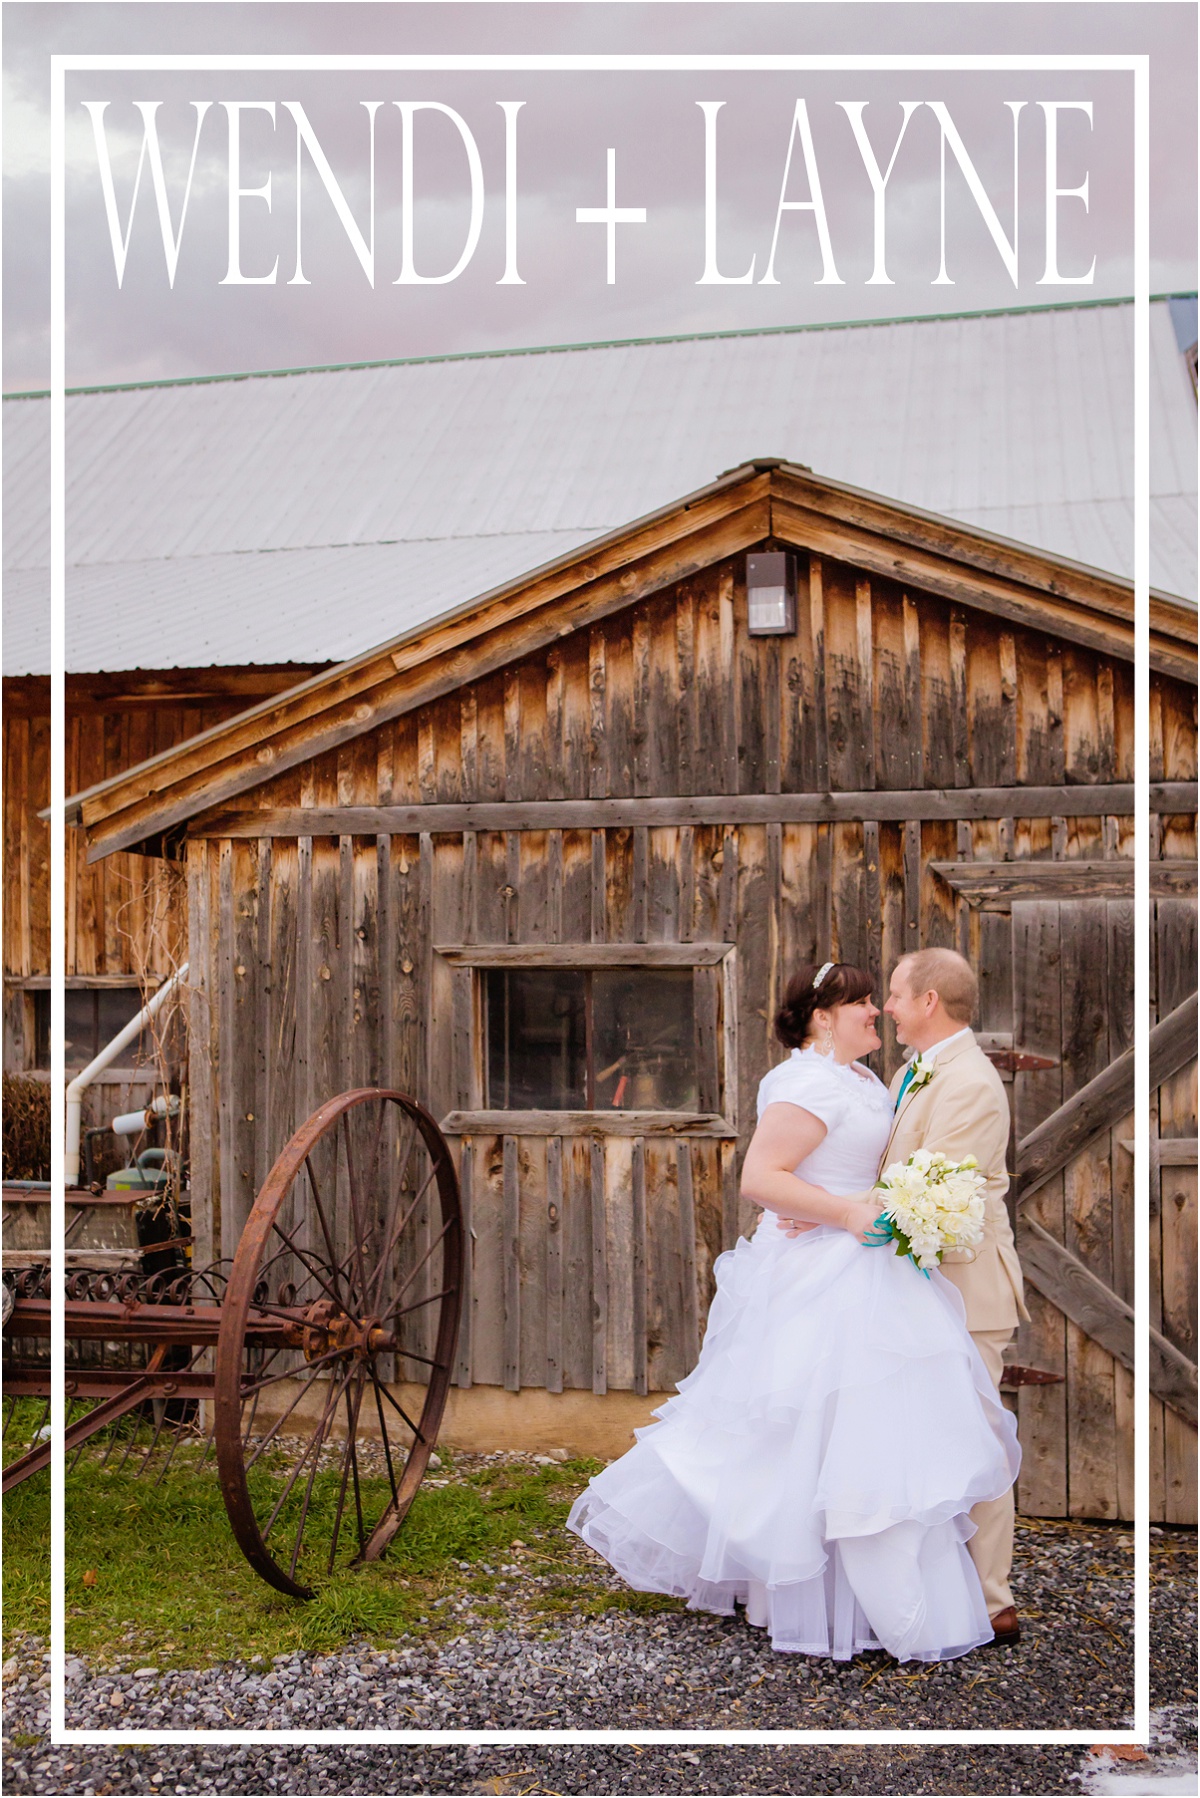 Terra Cooper Photography Weddings Brides 2015_5398.jpg